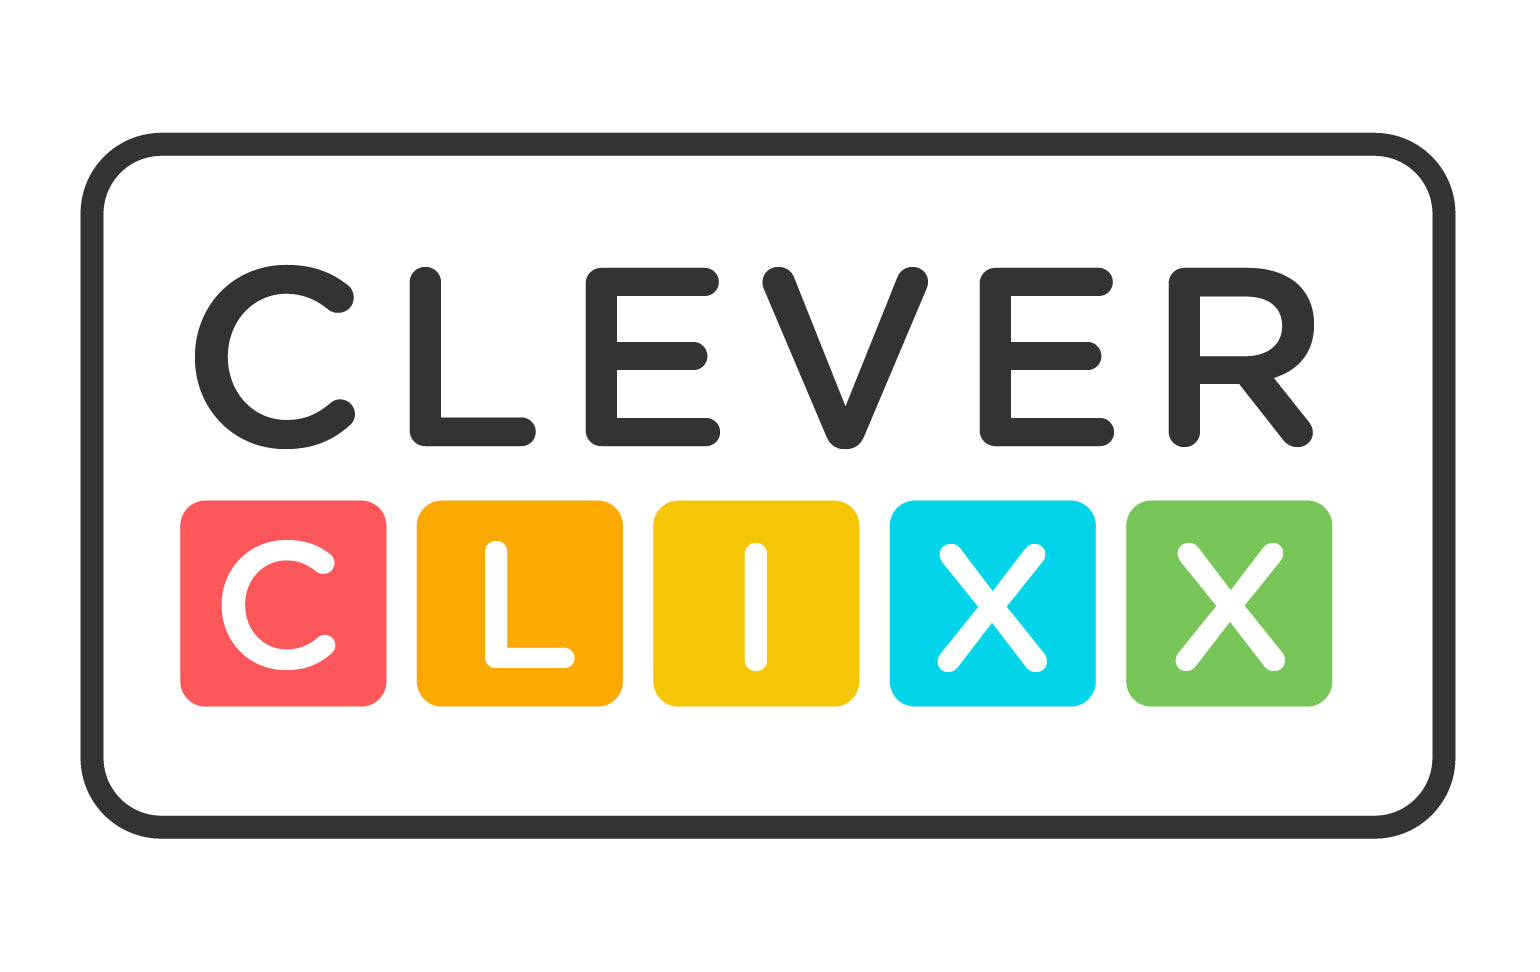 Cleverclixx B2C